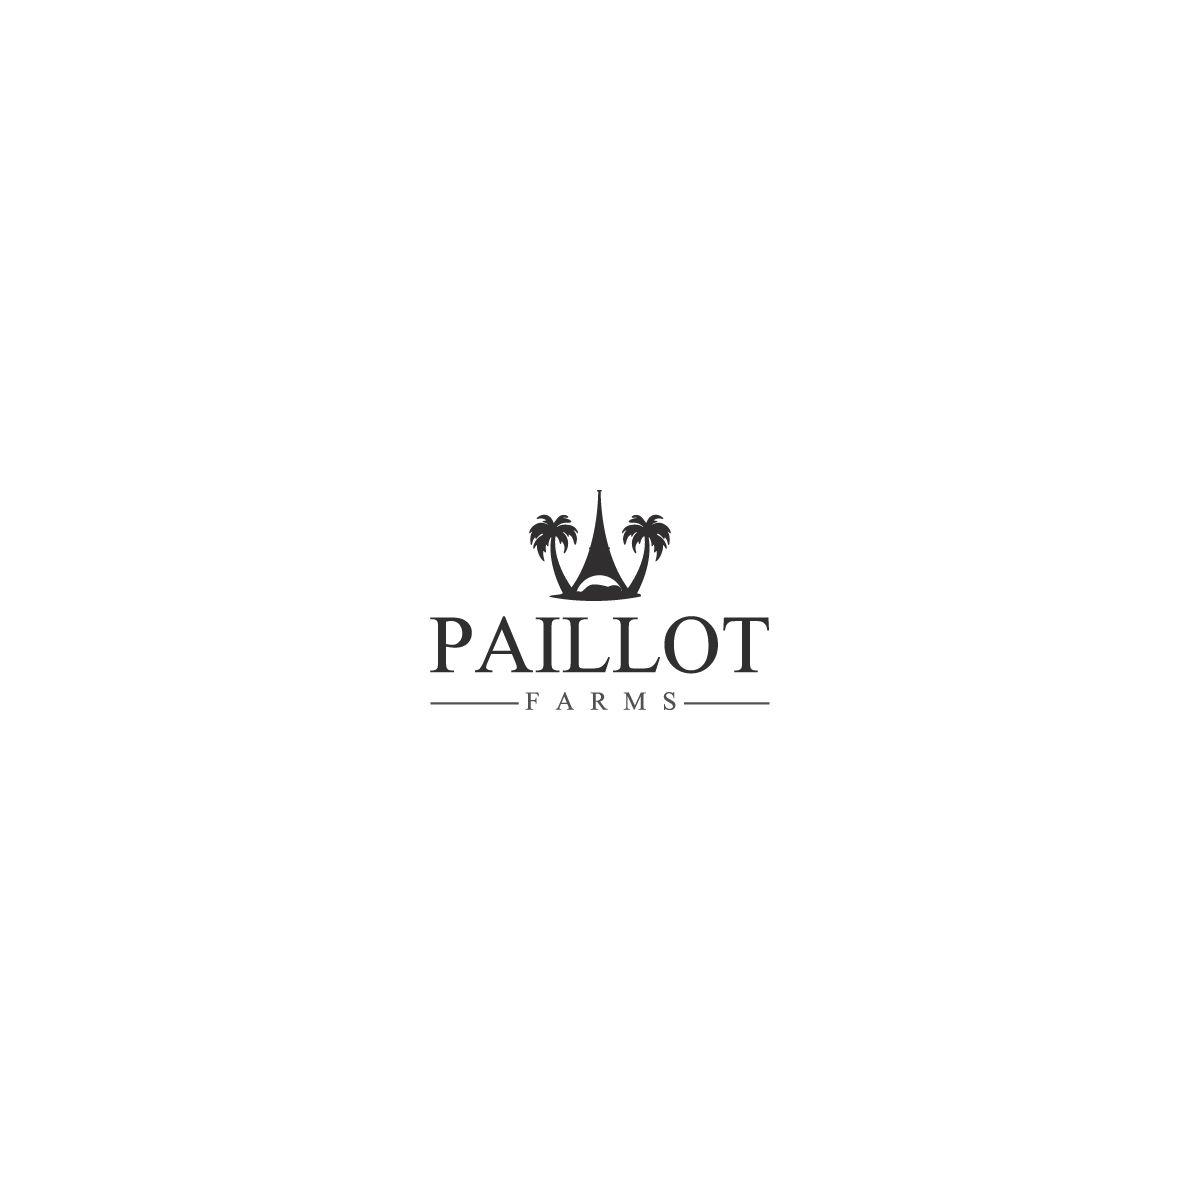 Primitive 21 Logo - Playful, Economical, It Company Logo Design for Paillot Farms by ...